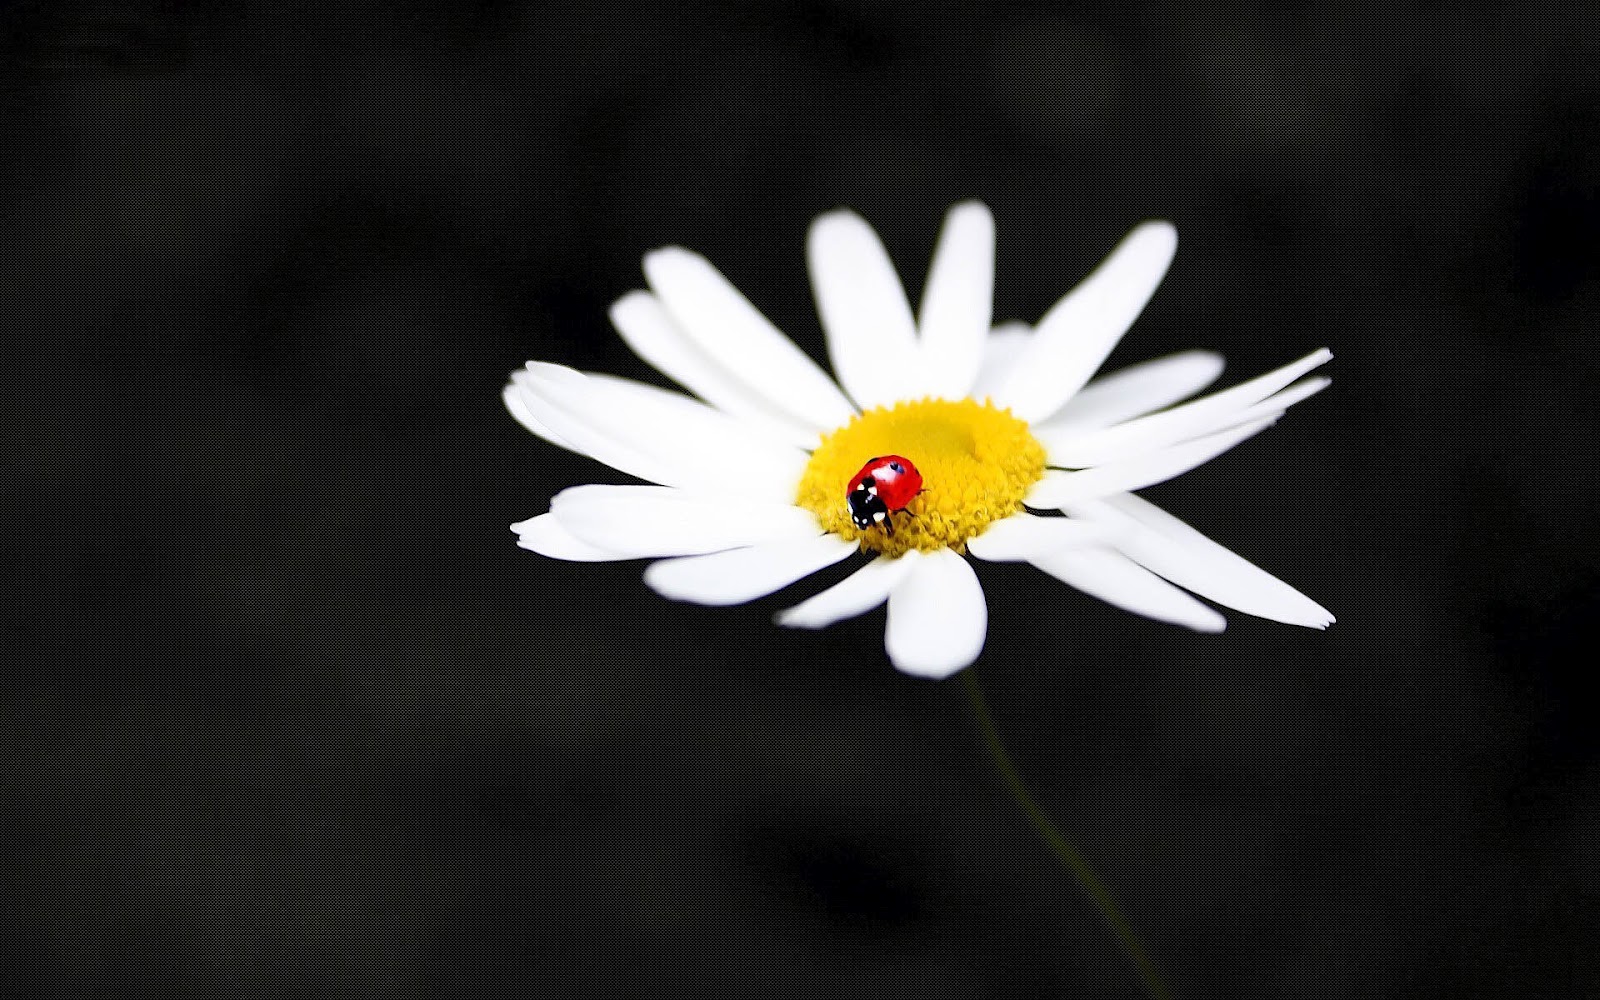 Ladybug Wallpaper With A Walking On White Flower HD Ladybugs